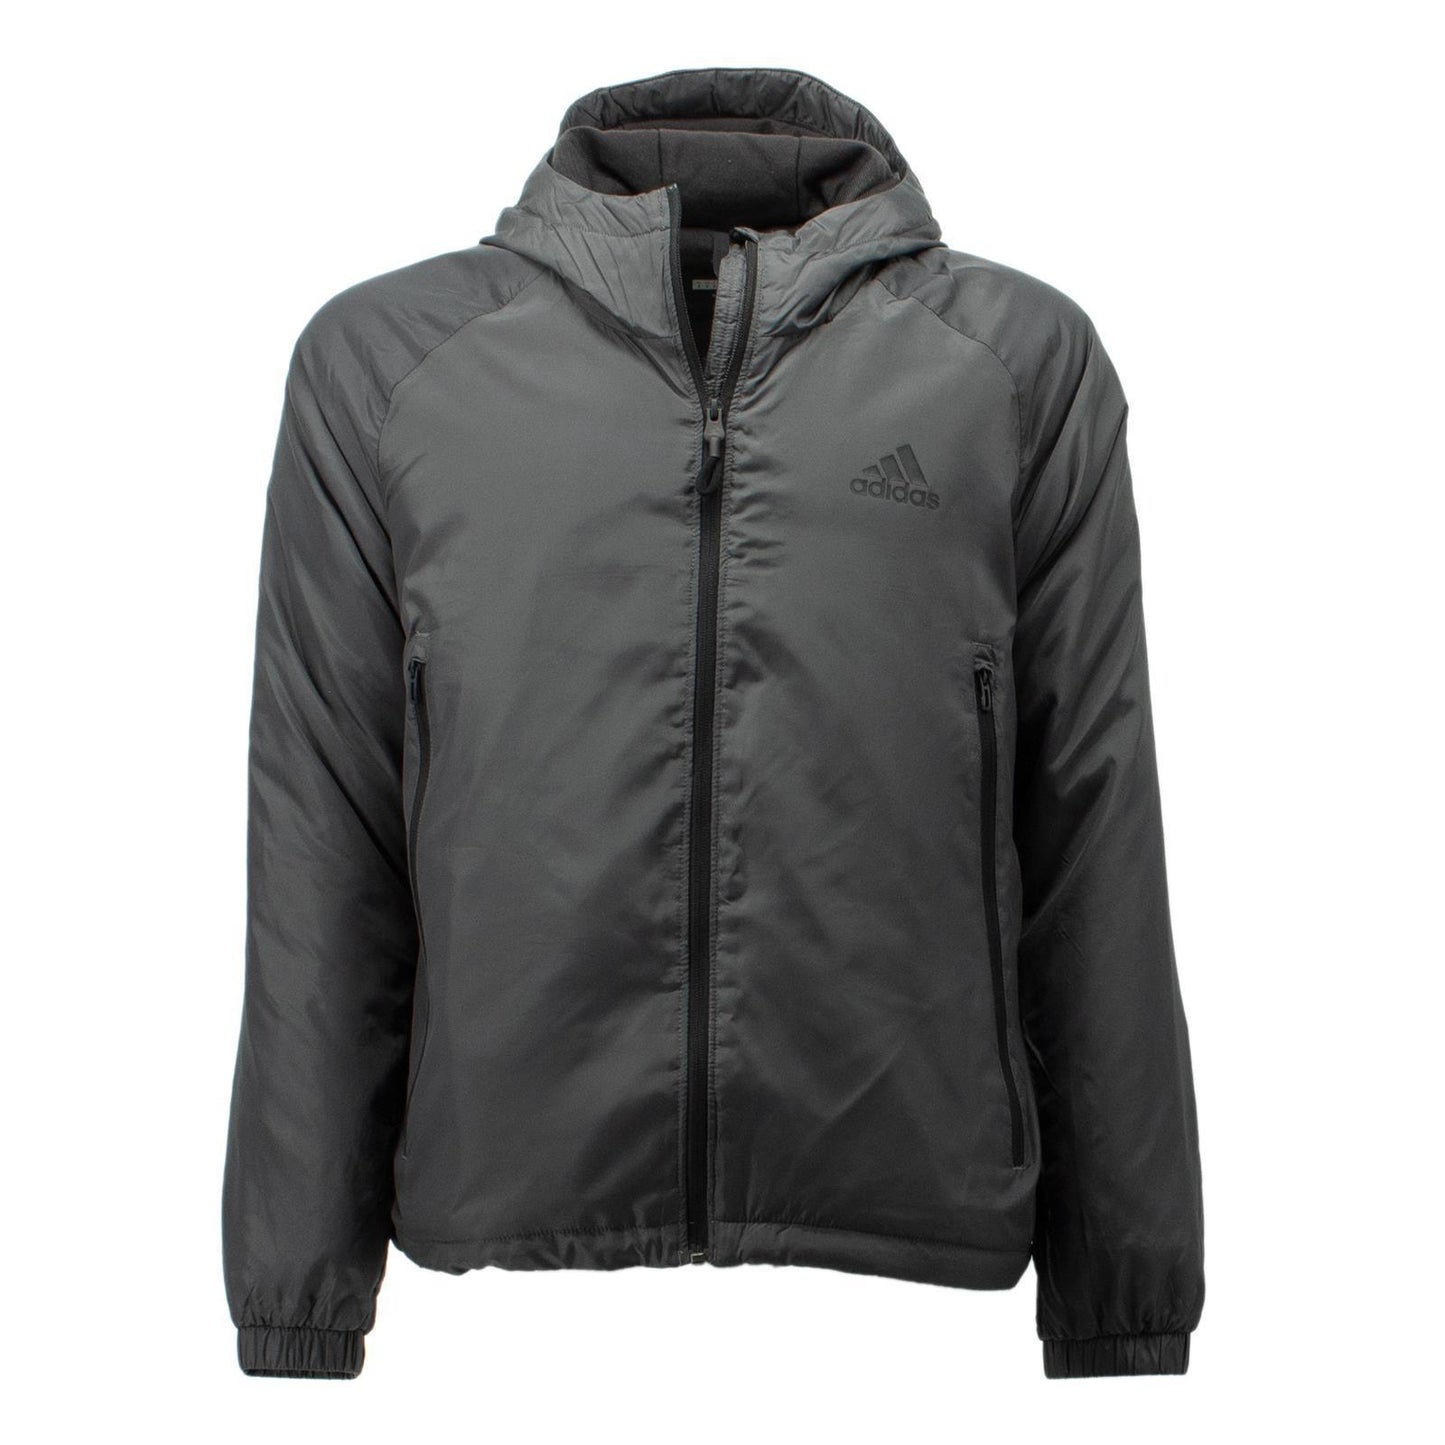 Adidas BTS Lined Jacket Essentials Insulated Outdoor Jacke Herren grau CV7463